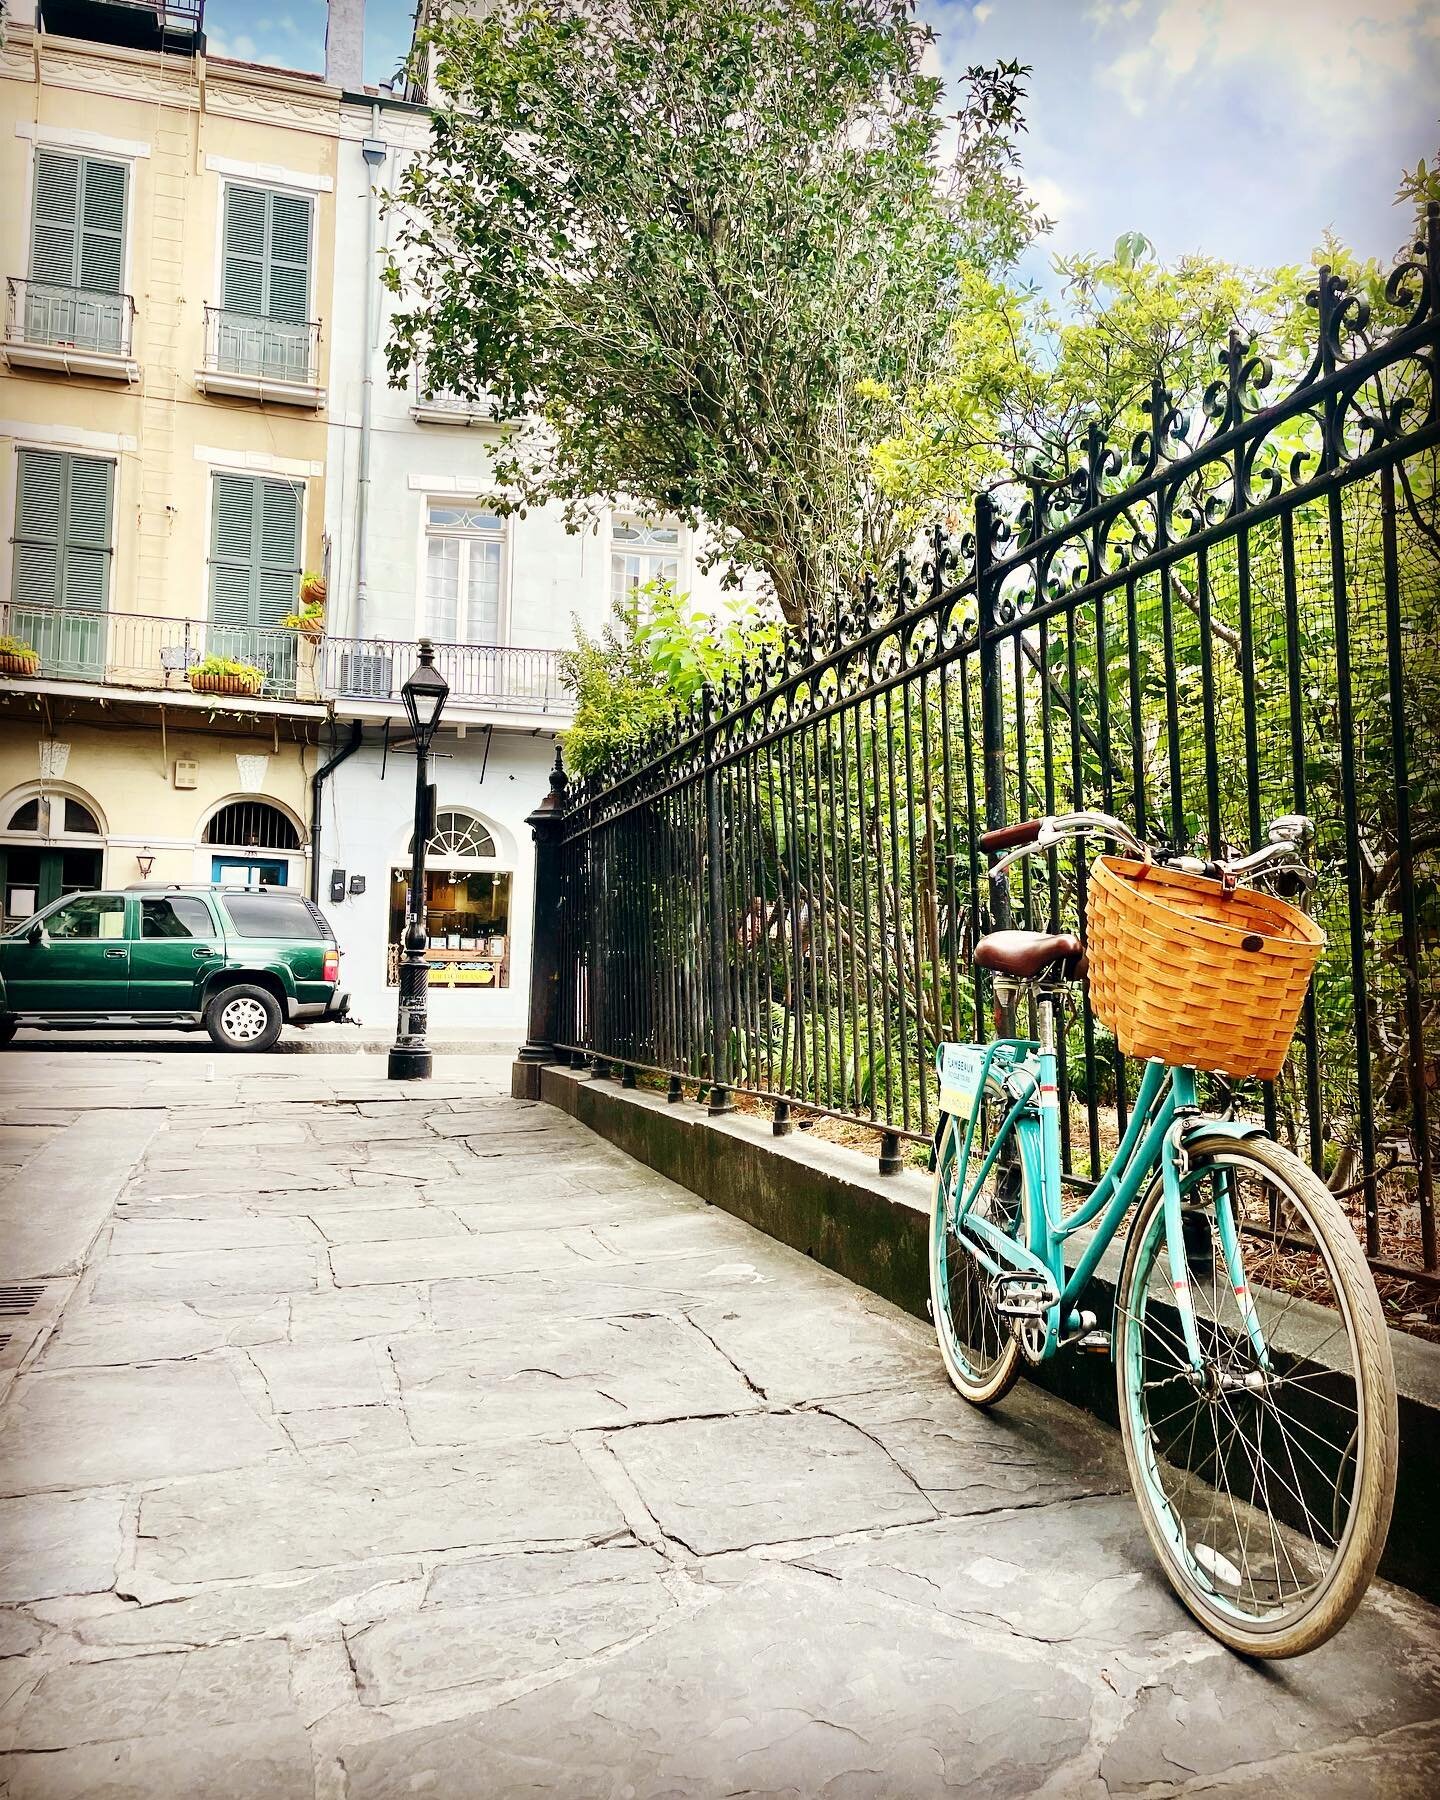 Those moments of stillness in the Vieux Carr&eacute;. #onetimeinnola #nola #neworleans #datbikelife #neworleansbiketours #bicycle #publicbikes #visitneworleans #louisianatravel #visitneworleans #frenchquarter #followyournola #bikerentals #biketours #